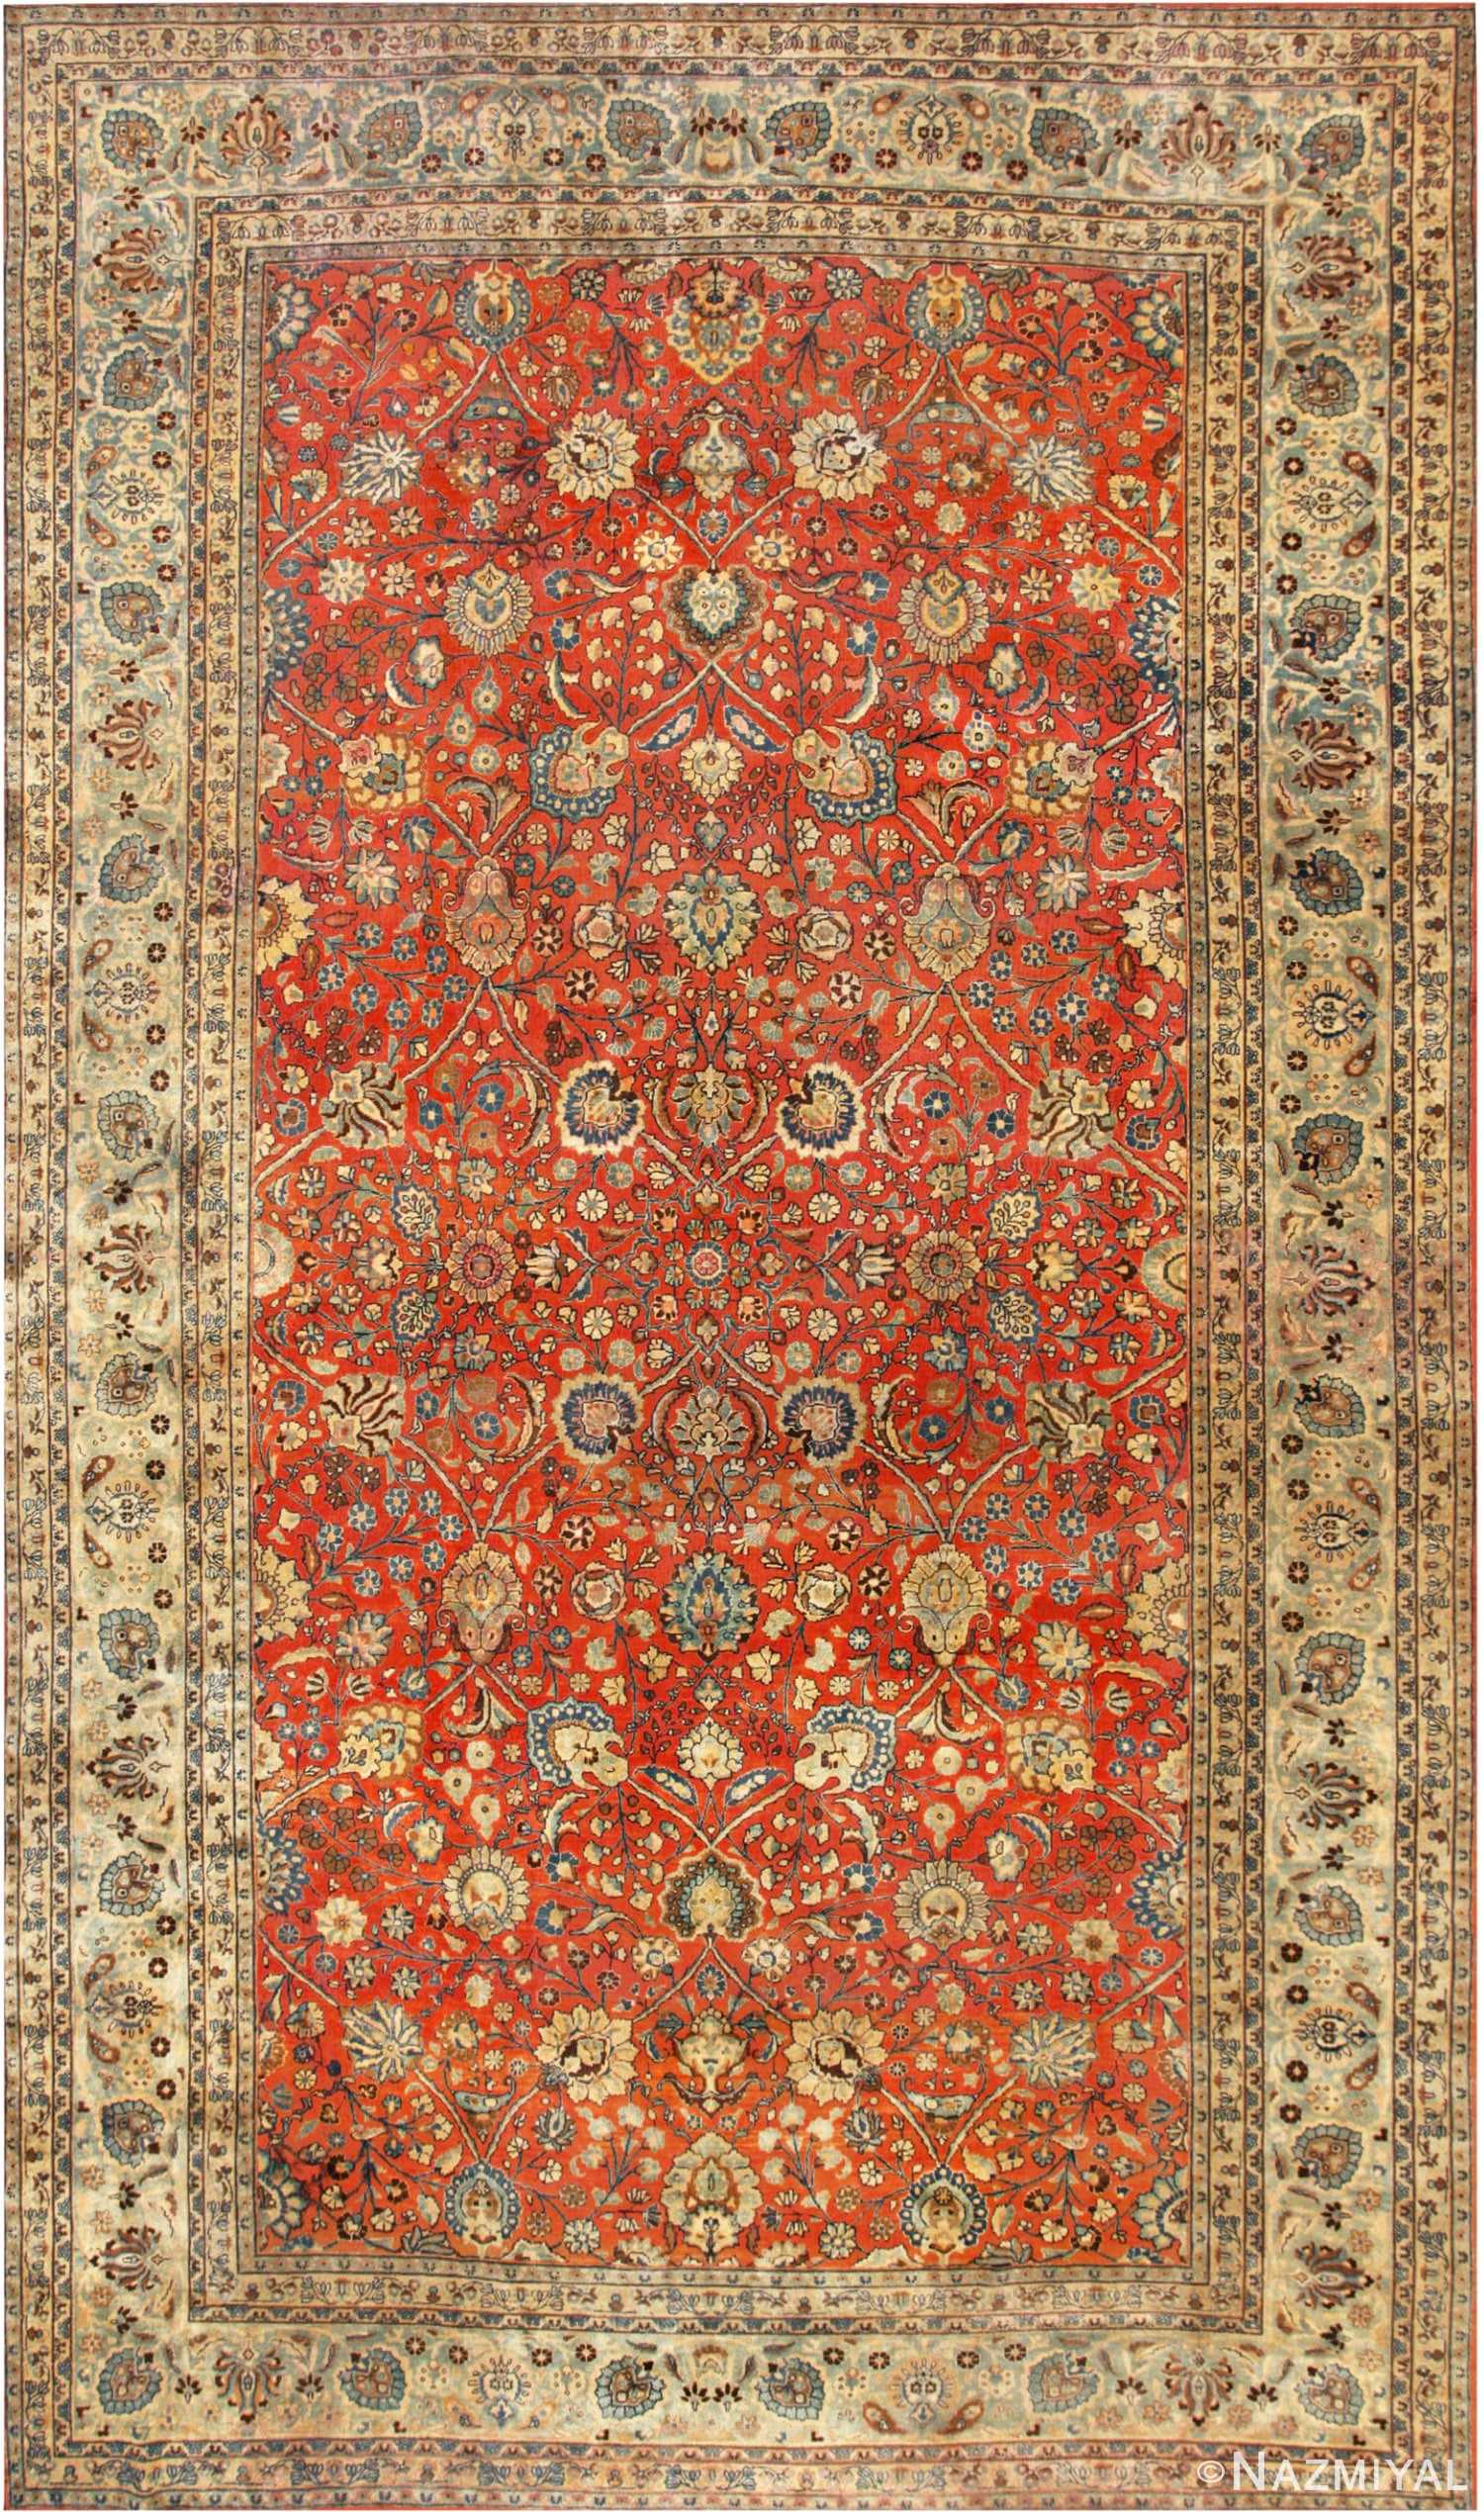 Large Rustic Antique Tabriz Carpet 44813 Nazmiyal Antique Rugs